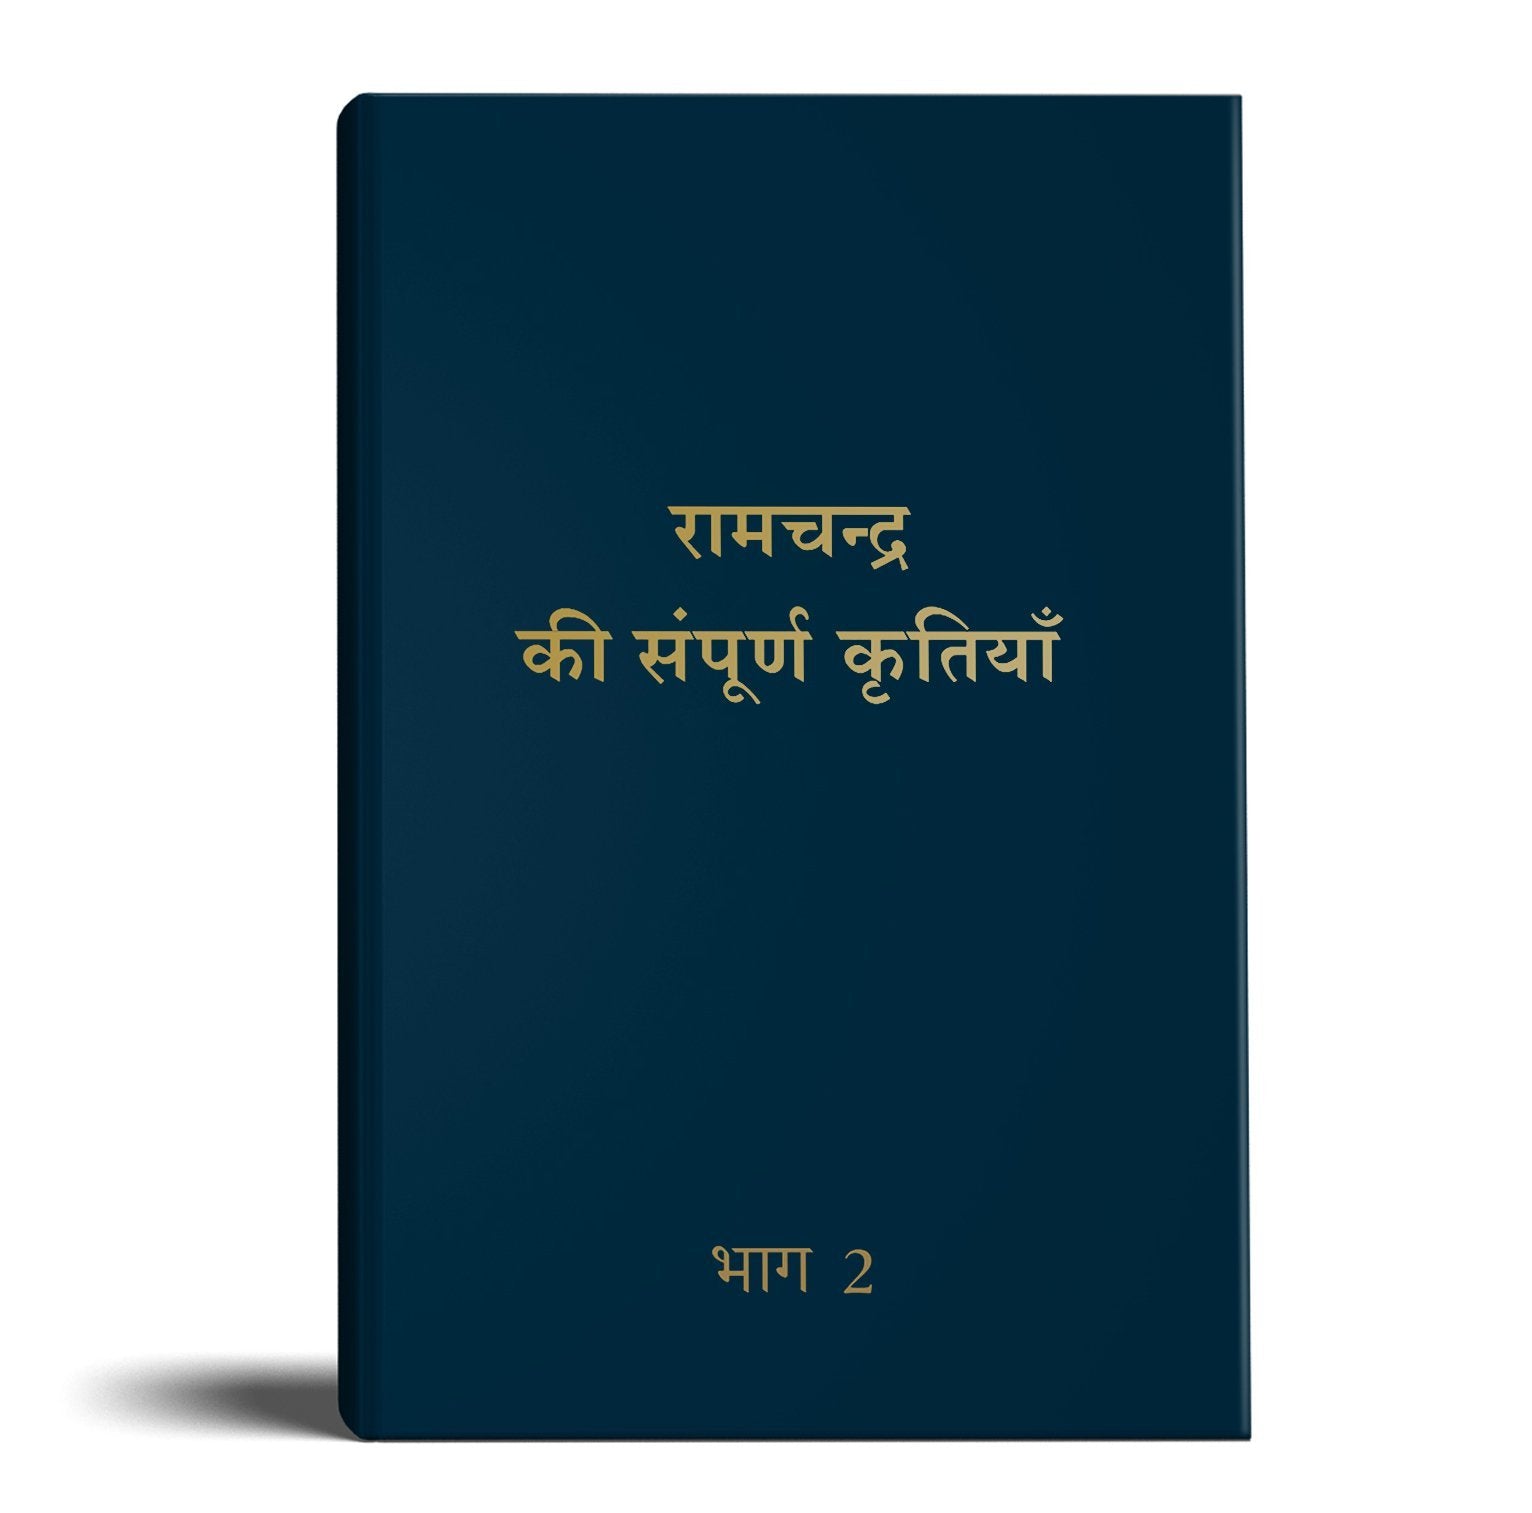 Complete Works of Ram Chandra (Lalaji) - Volume 2 - hfnl!fe